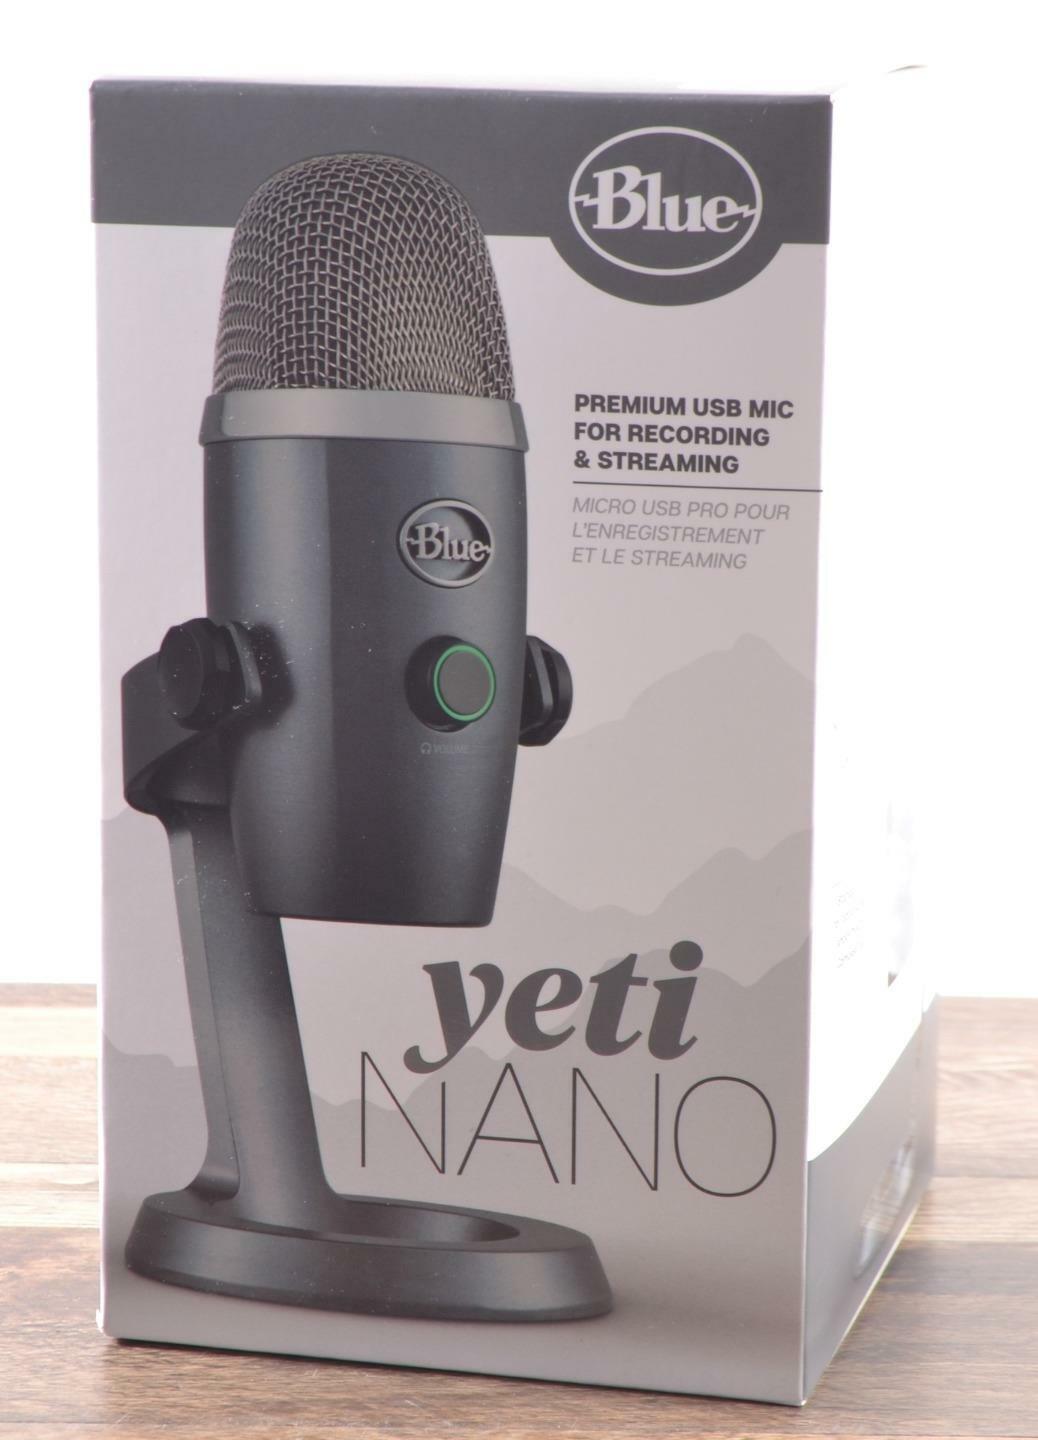 NEW Blue Yeti Nano USB Microphone for PC/Mac Recording + Streaming w/ Stand PnP